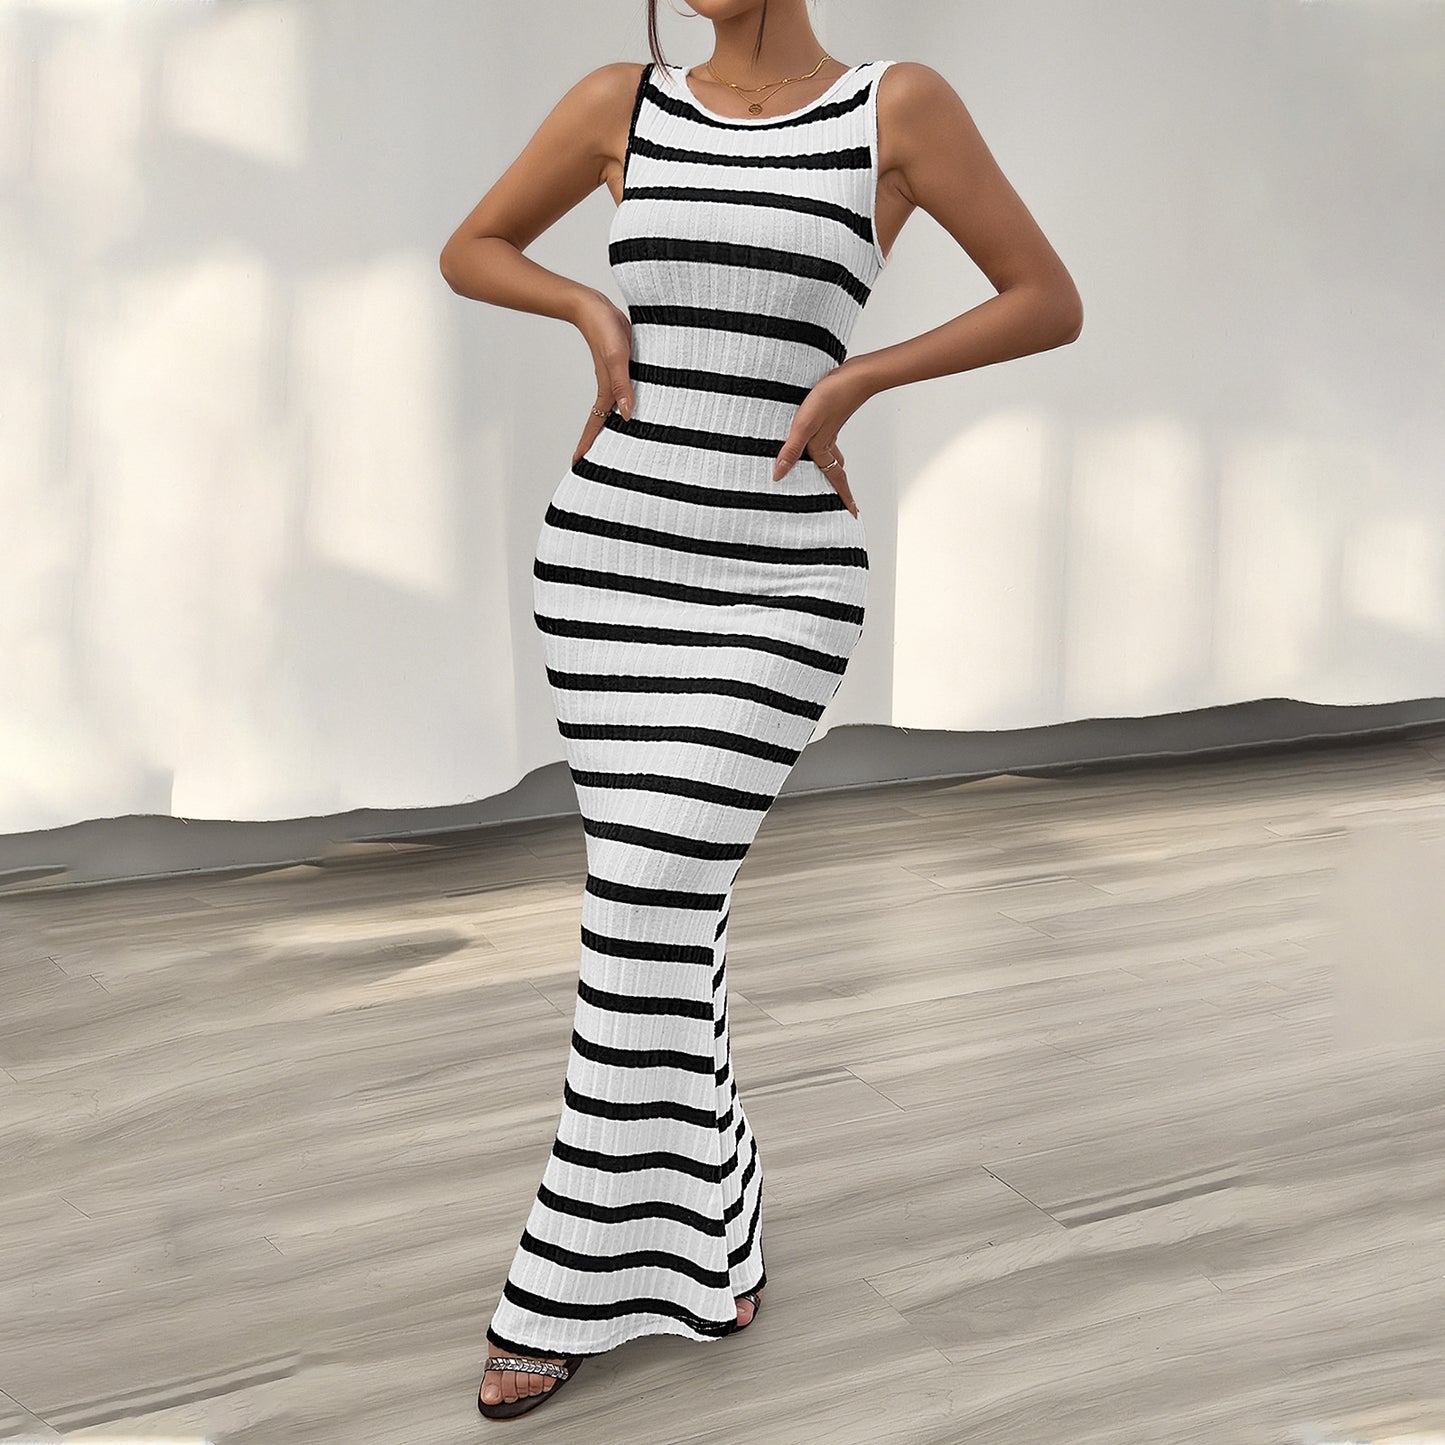 Women's Fashion Temperament Leisure Slim Striped Sleeveless Dress